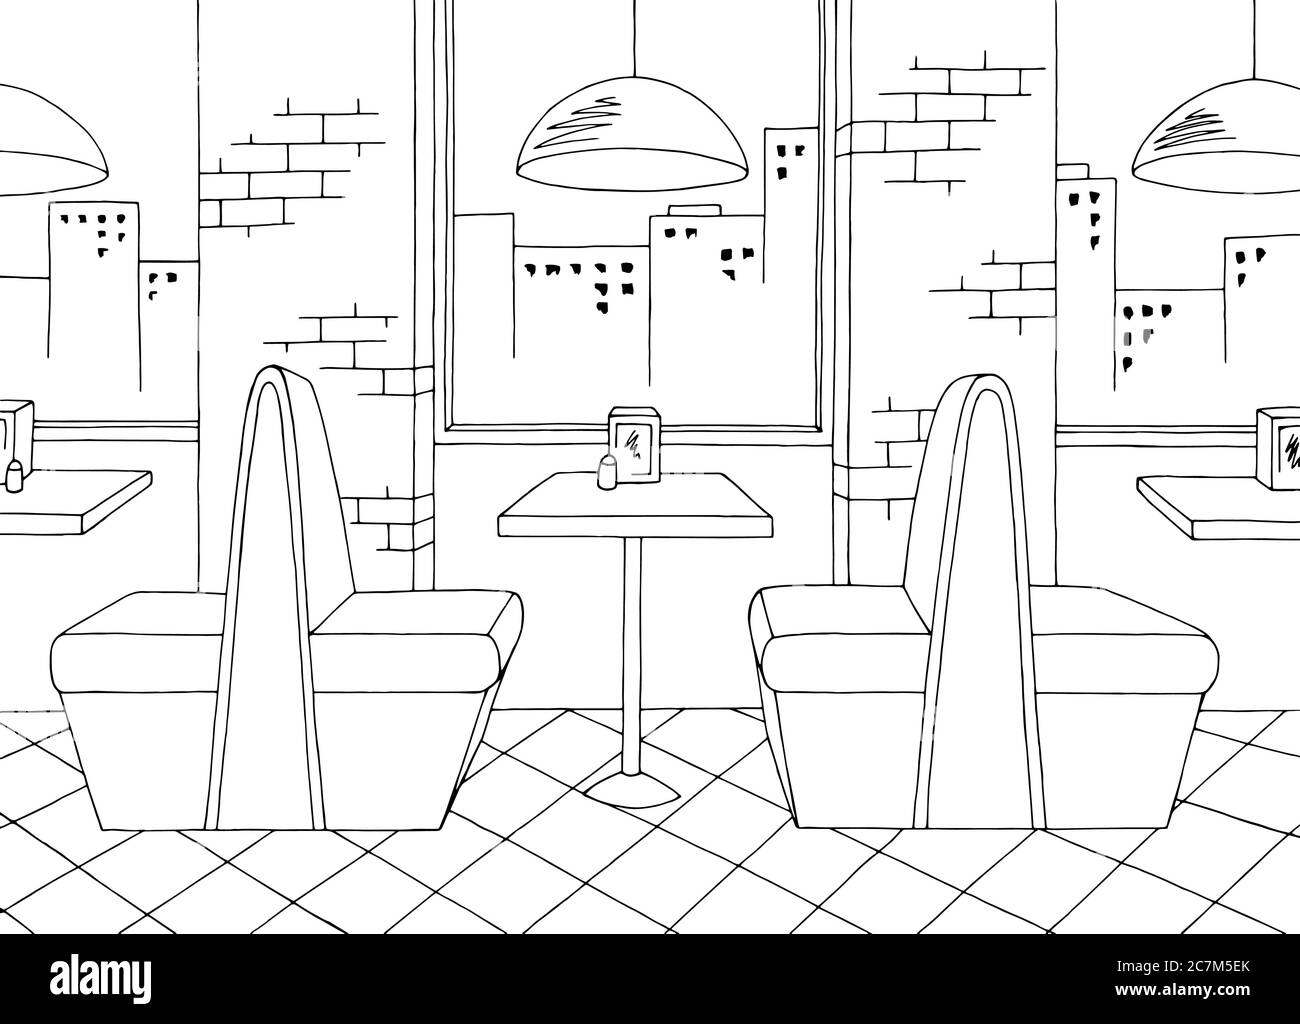 Cafe interior graphic black white sketch illustration vector Stock Vector